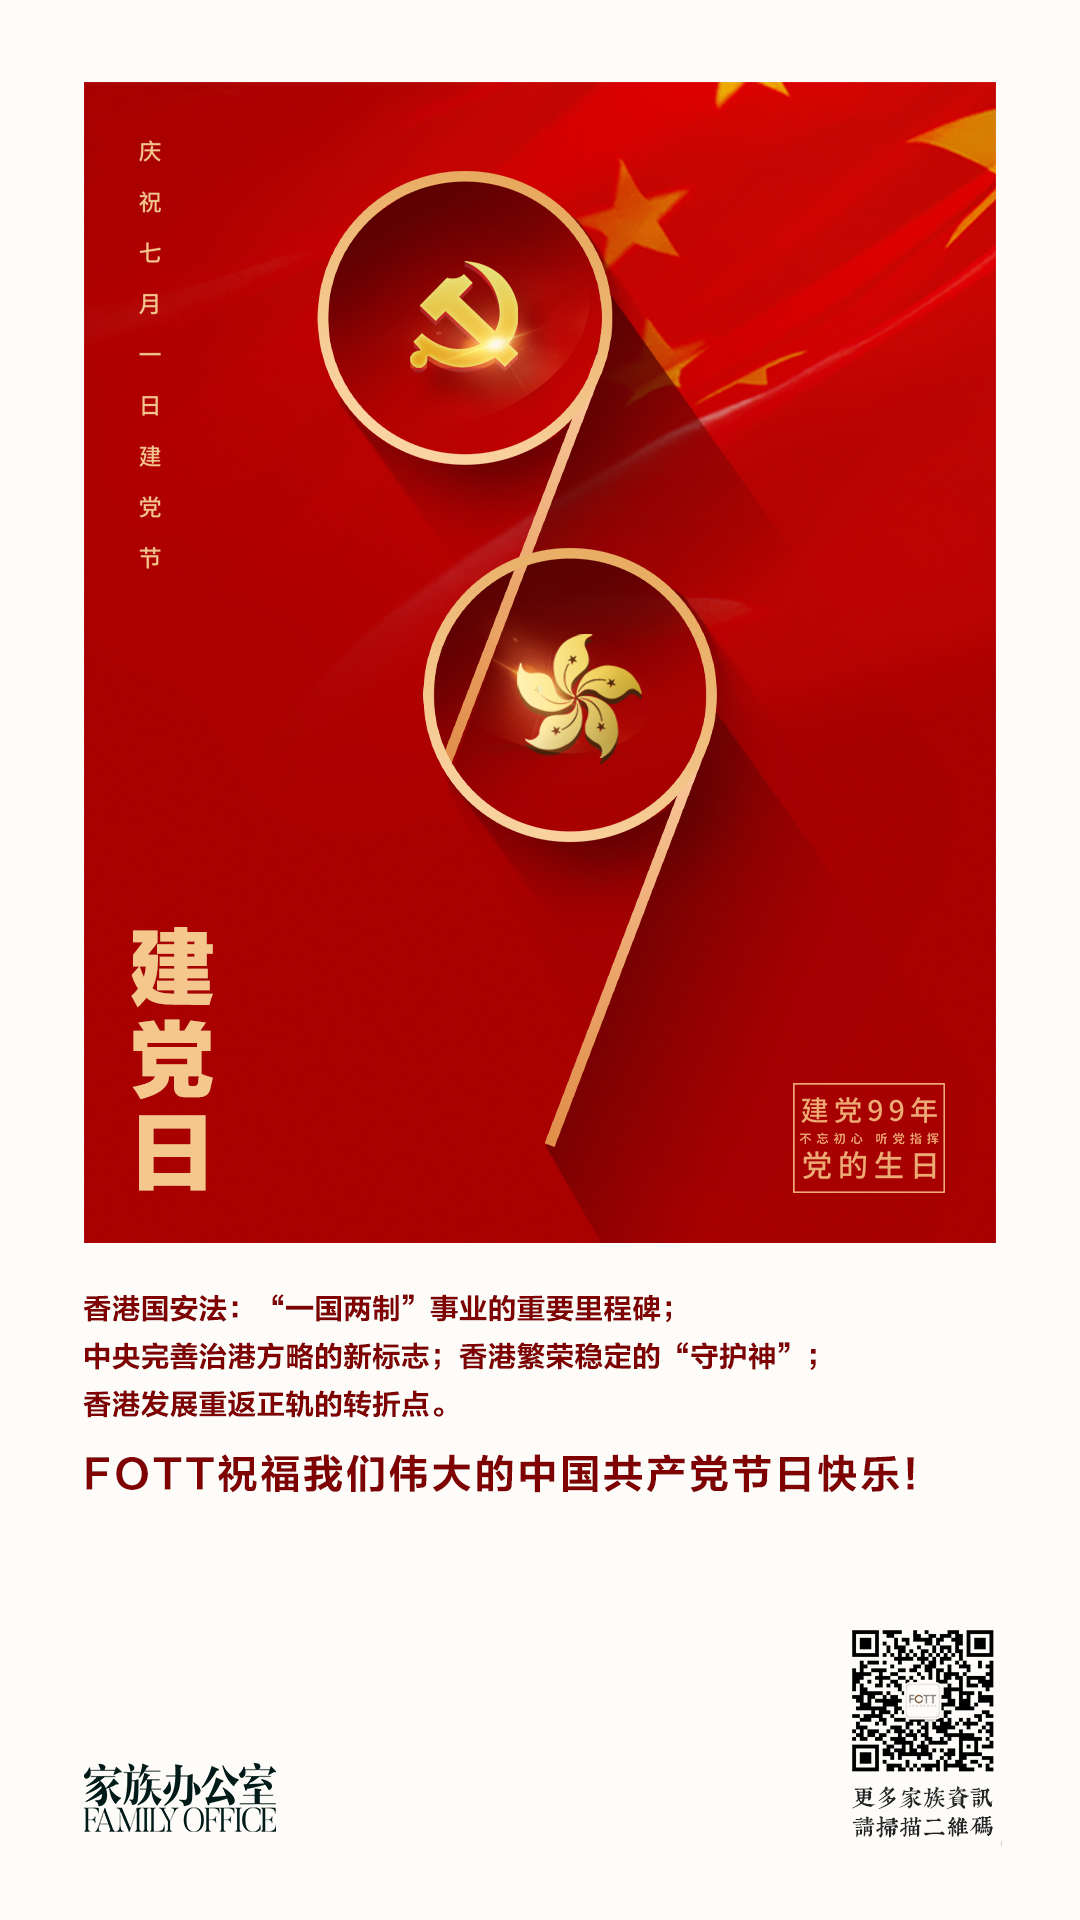 FOTT祝福我们伟大的中国共产党节日快乐!